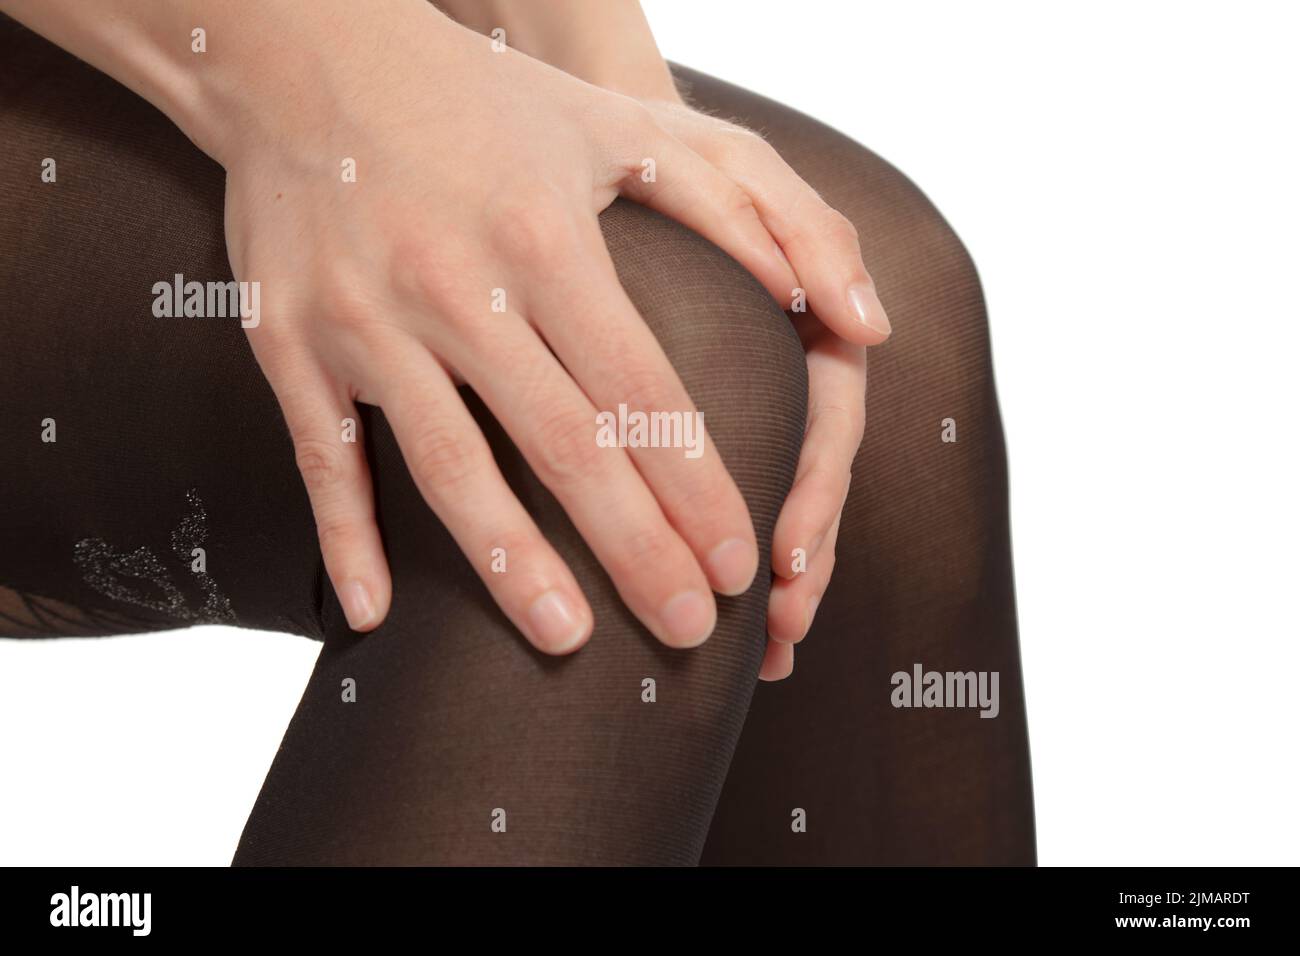 Female Knee Pain Holding Stock Photo